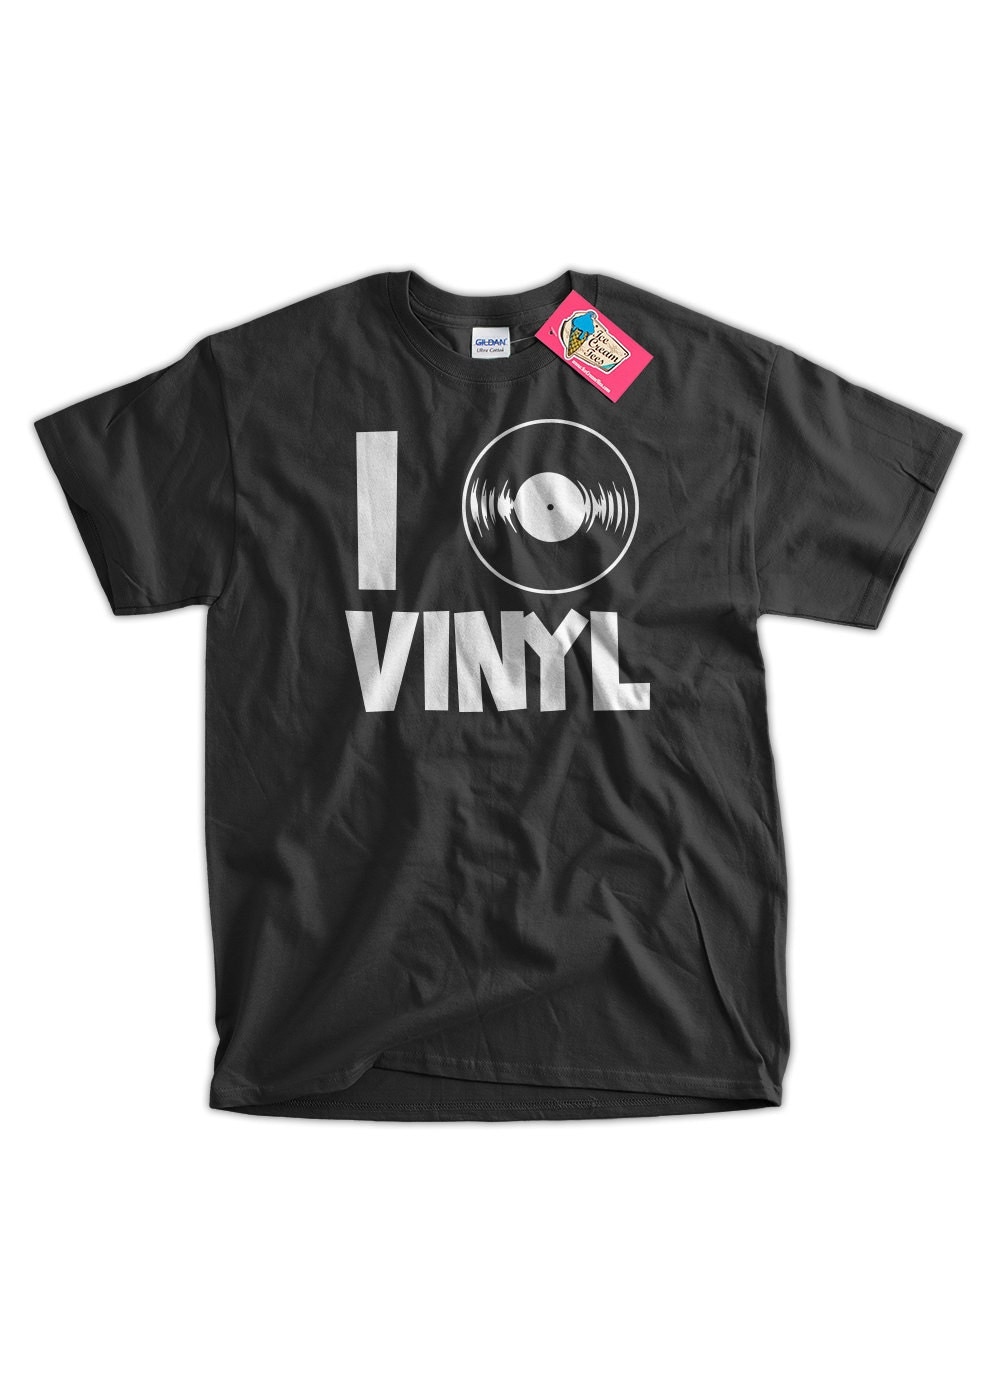 Funny Vinyl T-Shirt I Heart Vinyl Tee Shirt T by IceCreamTees